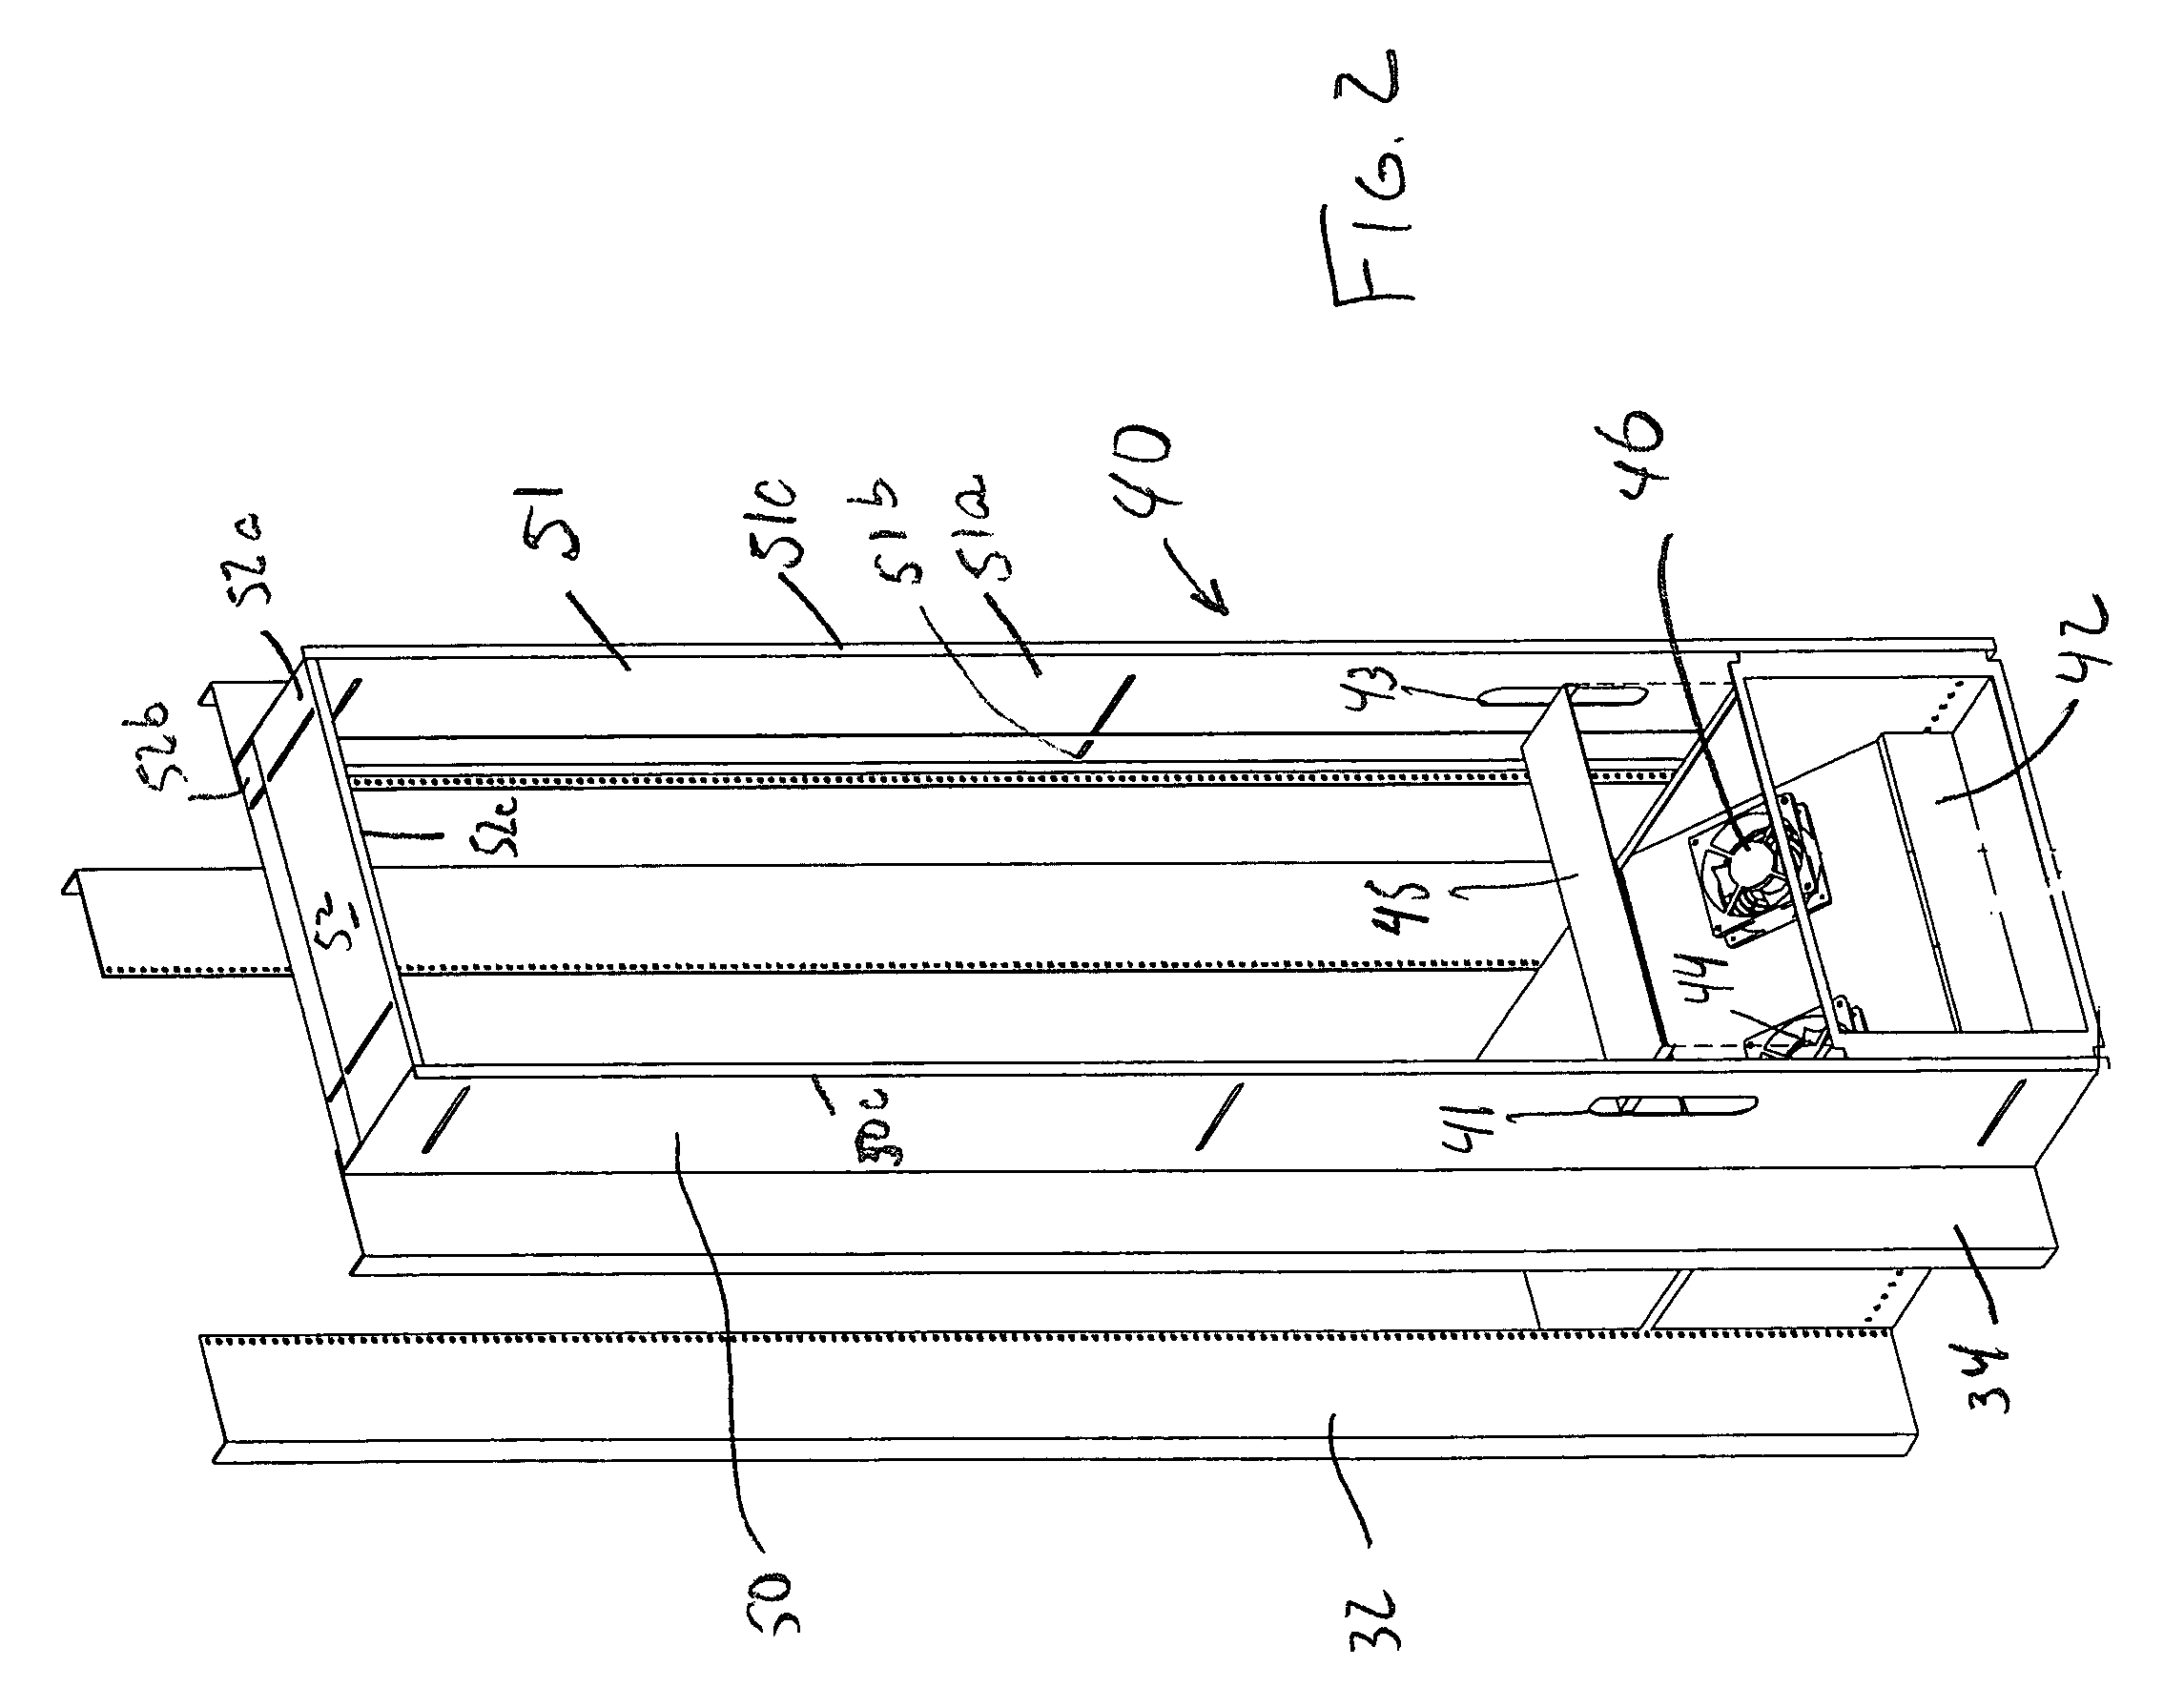 Air distribution arrangement for rack-mounted equipment